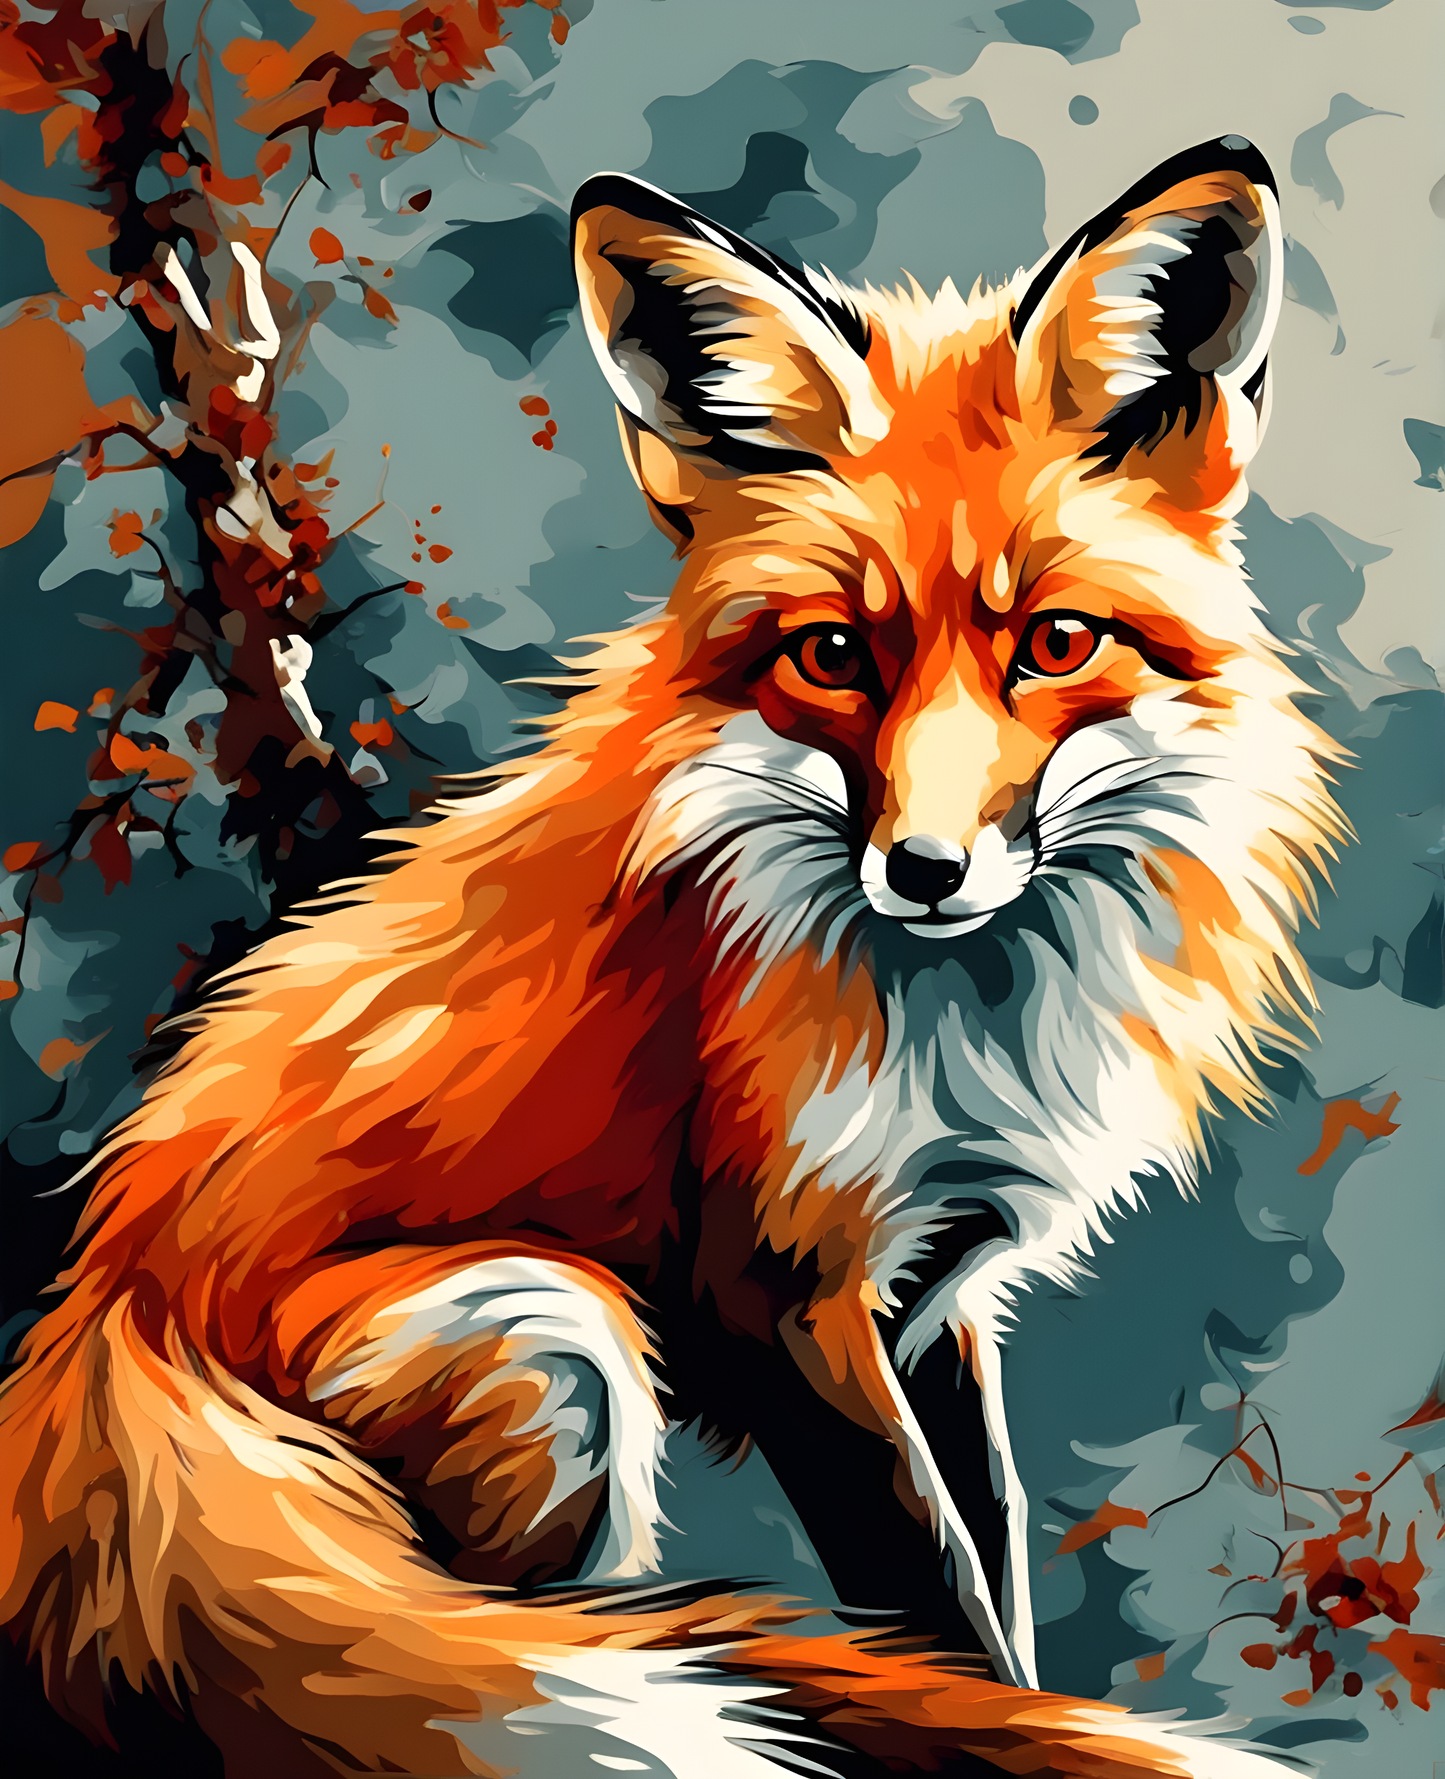 Red Fox (3) - Van-Go Paint-By-Number Kit